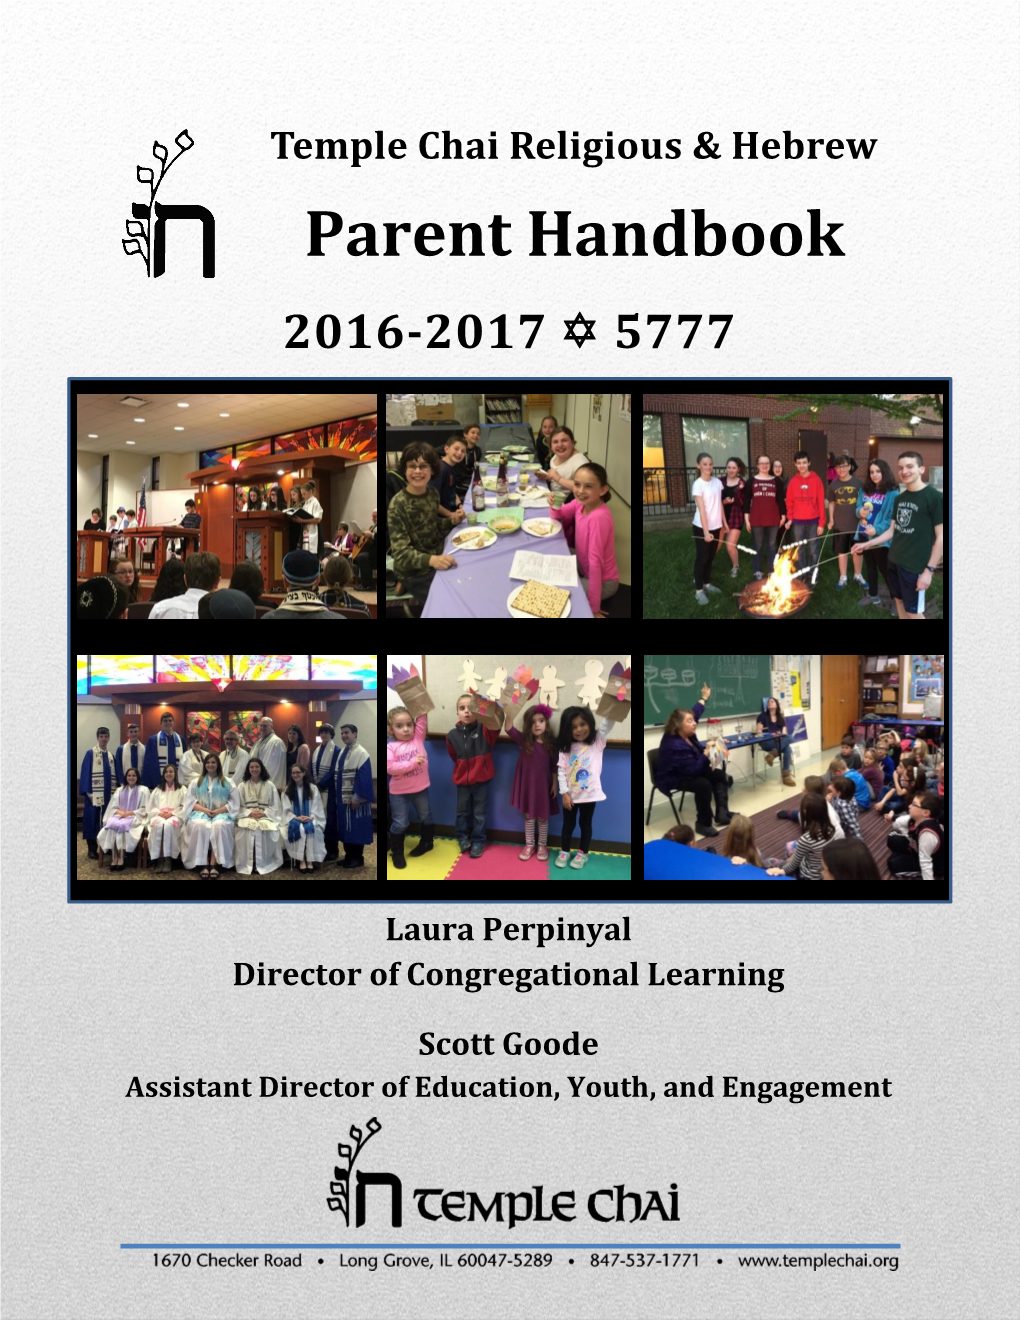 Temple Chai Parent Handbook 2016-2017/5777